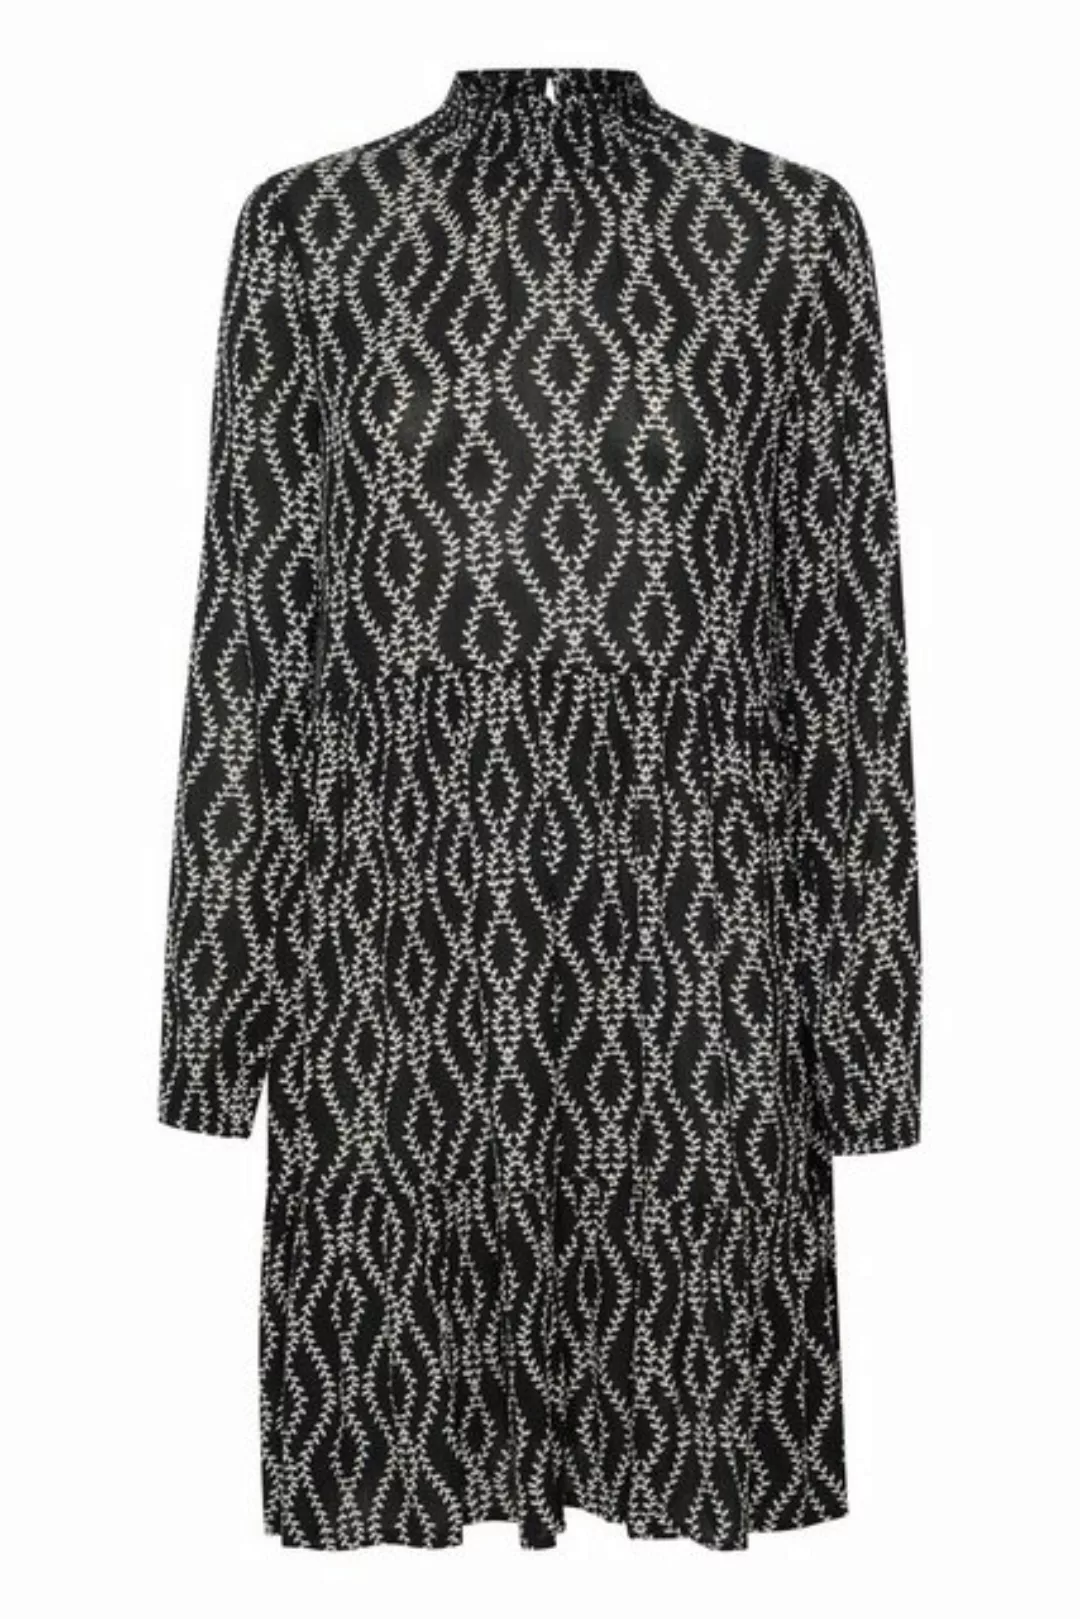 KAFFE Jerseykleid Kleid KArikka günstig online kaufen